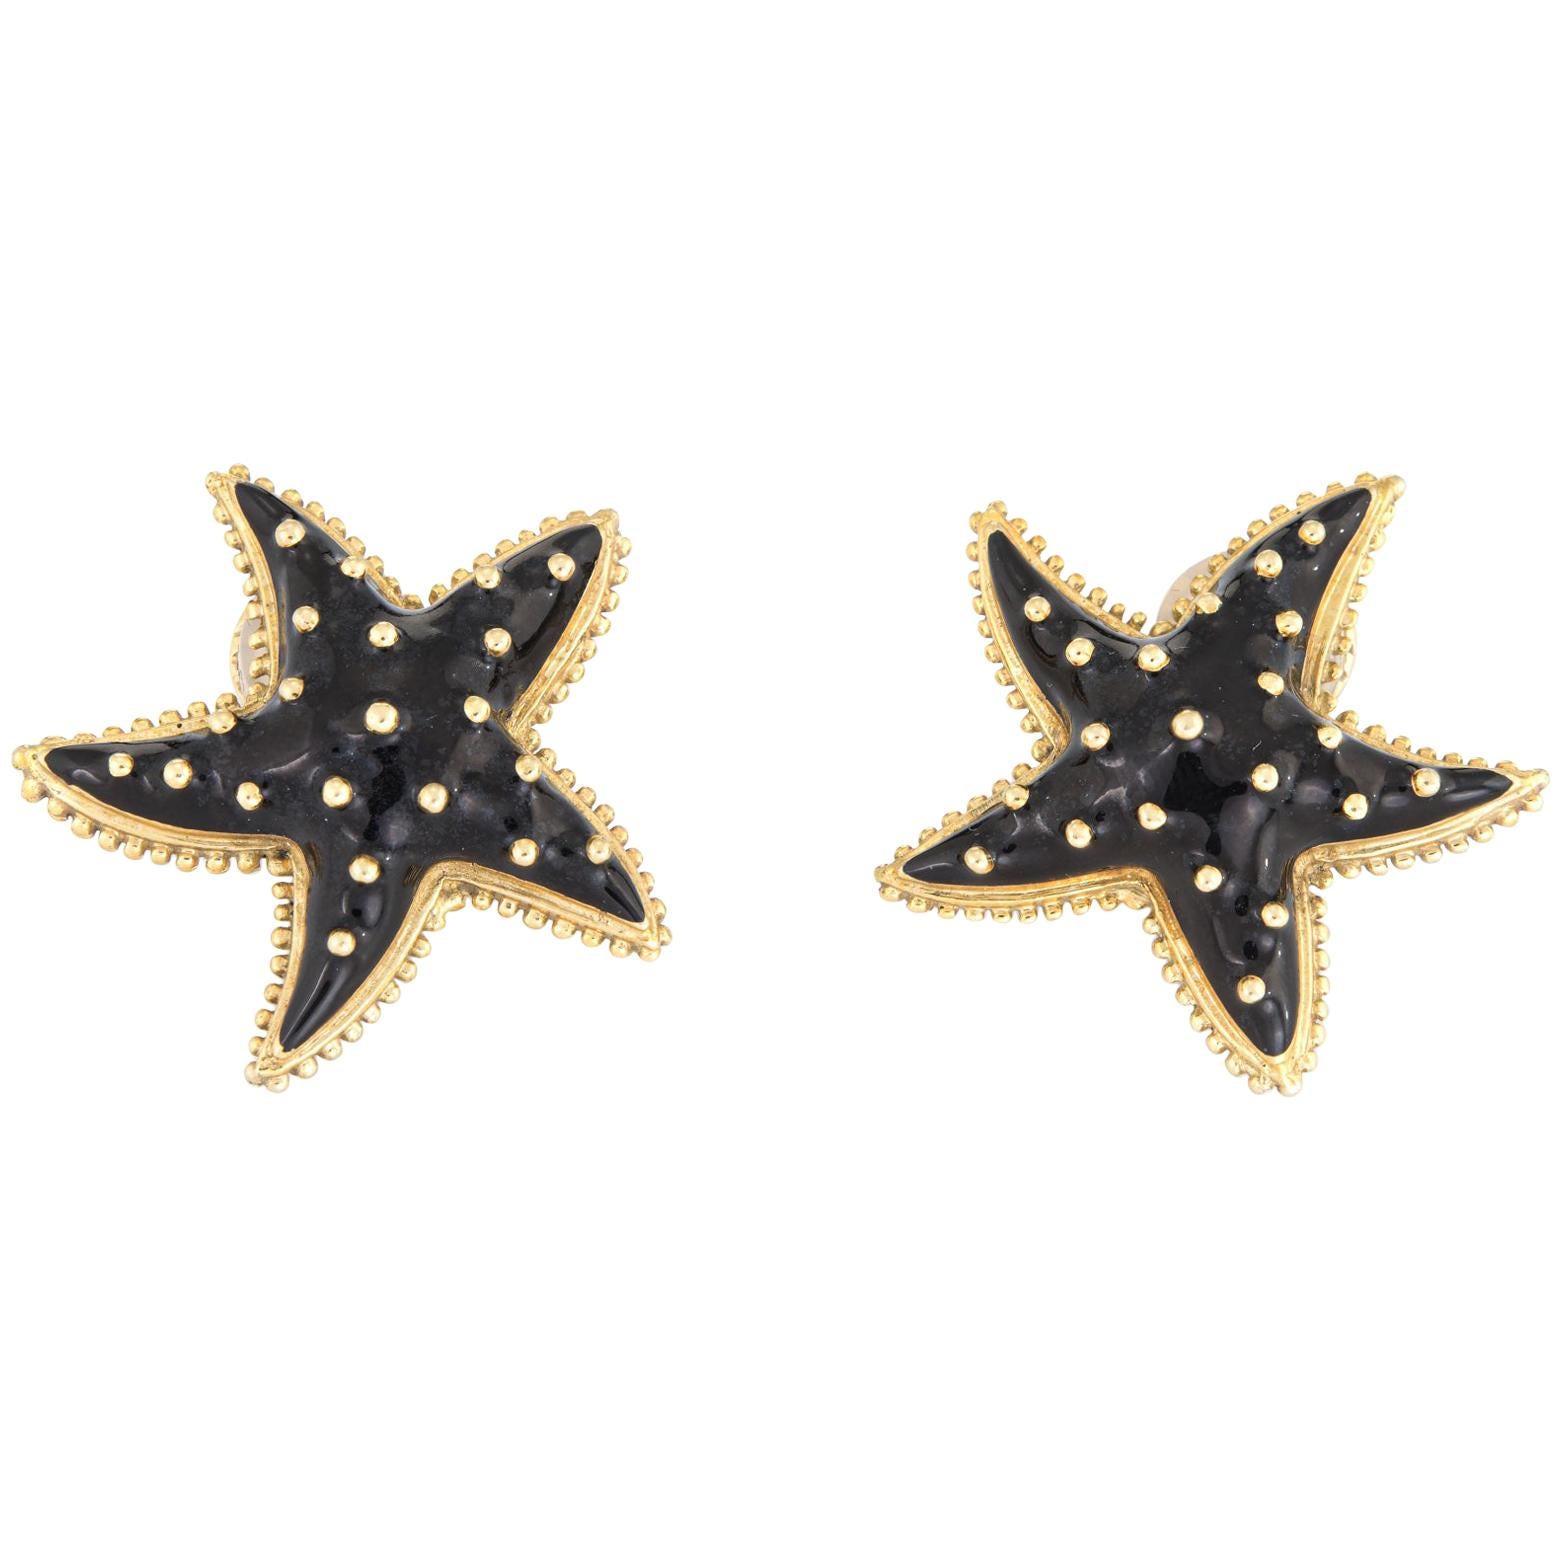 Hidalgo Starfish Earrings Black Enamel 18 Karat Yellow Gold Large Estate Jewelry